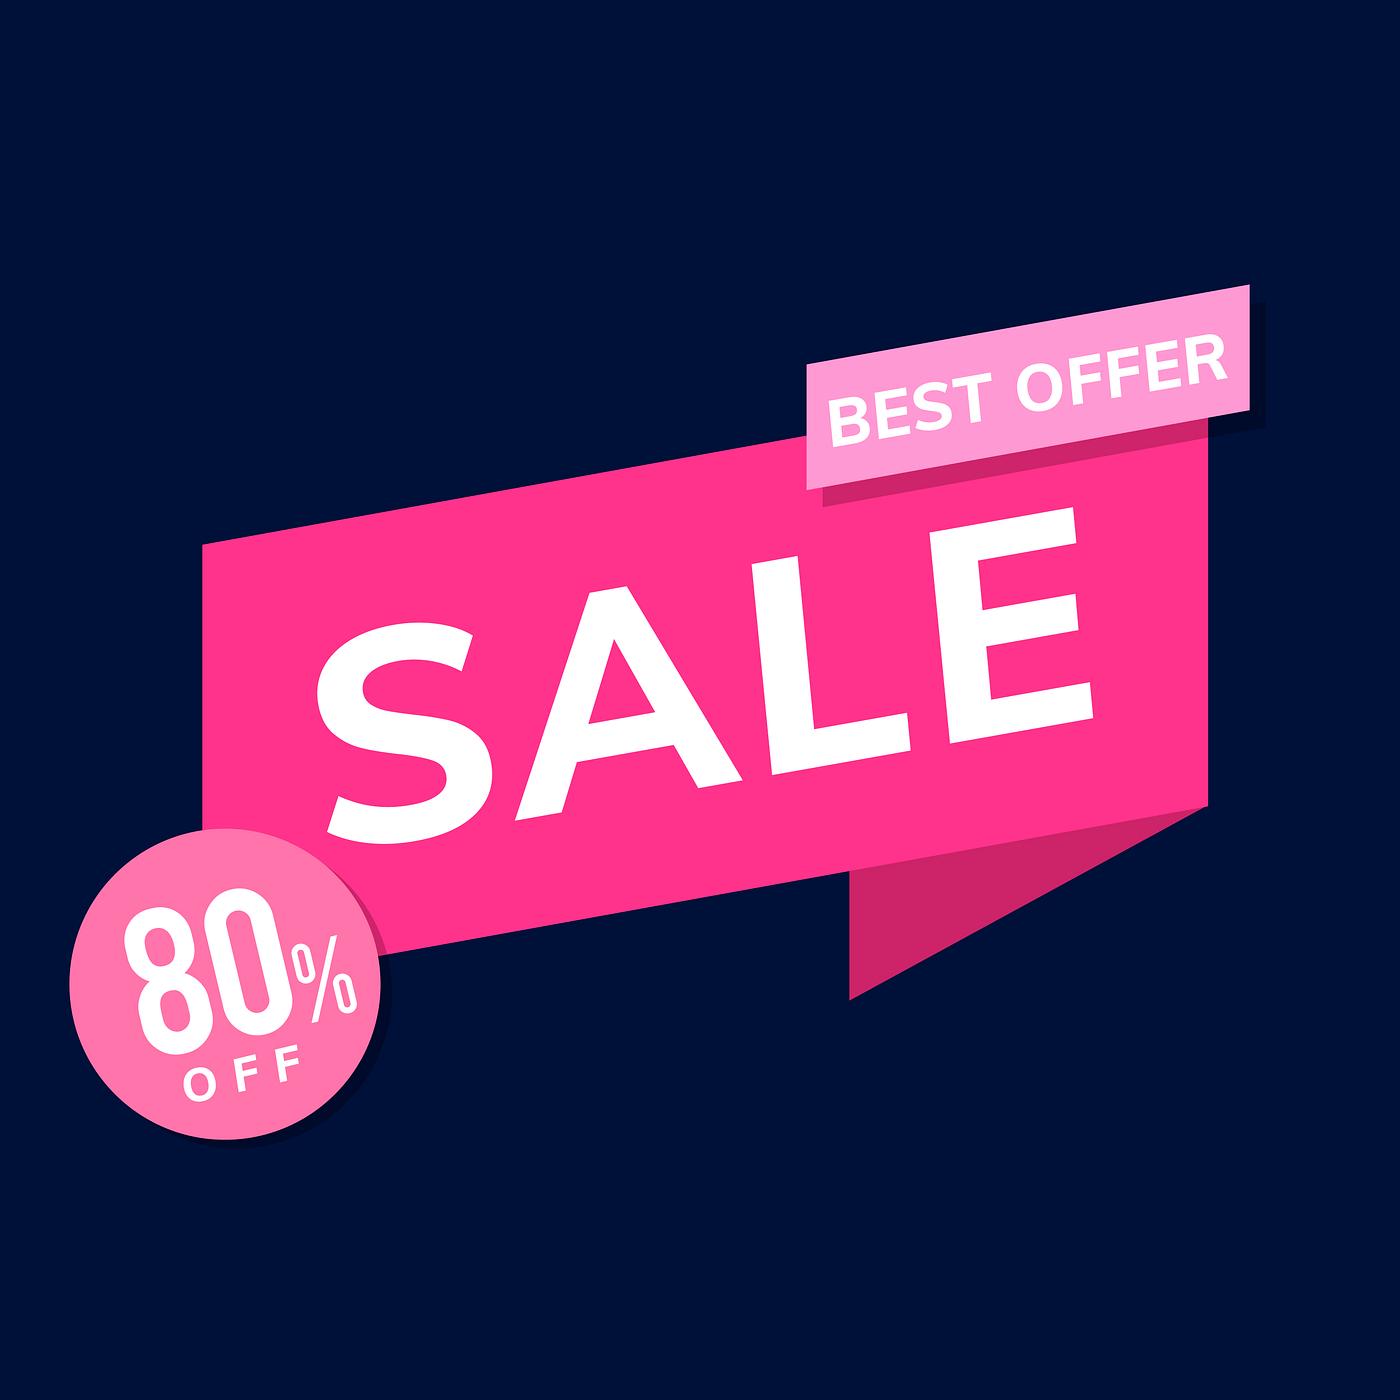 Best Offer Sale 80 Shop Promotion Advertisem Free Stock